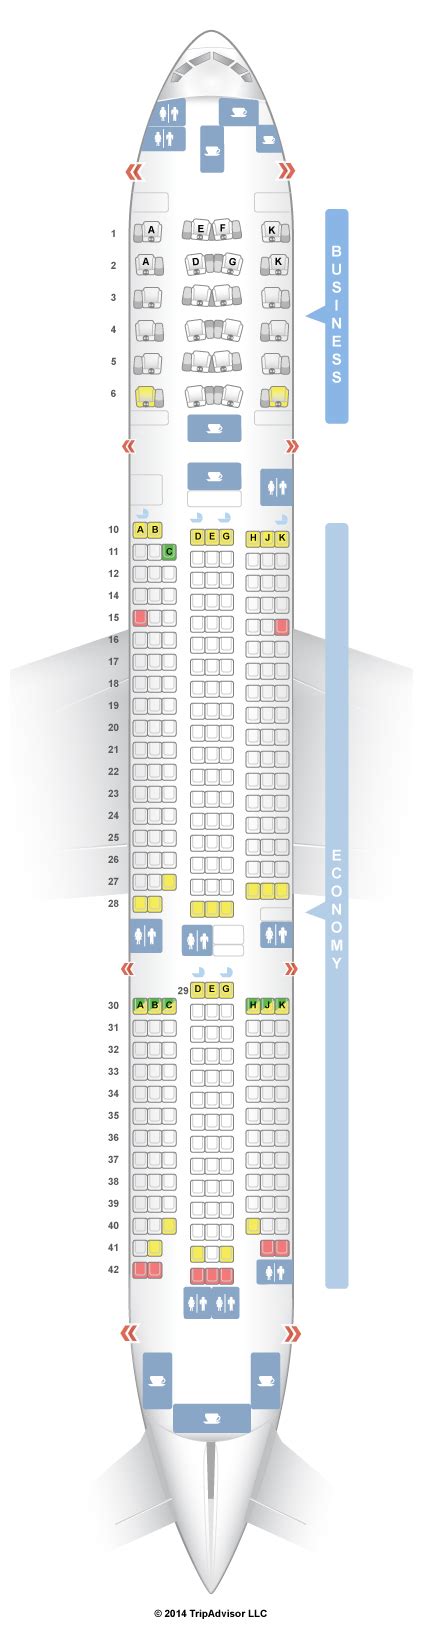 Eurostar Seat Map Coach 18